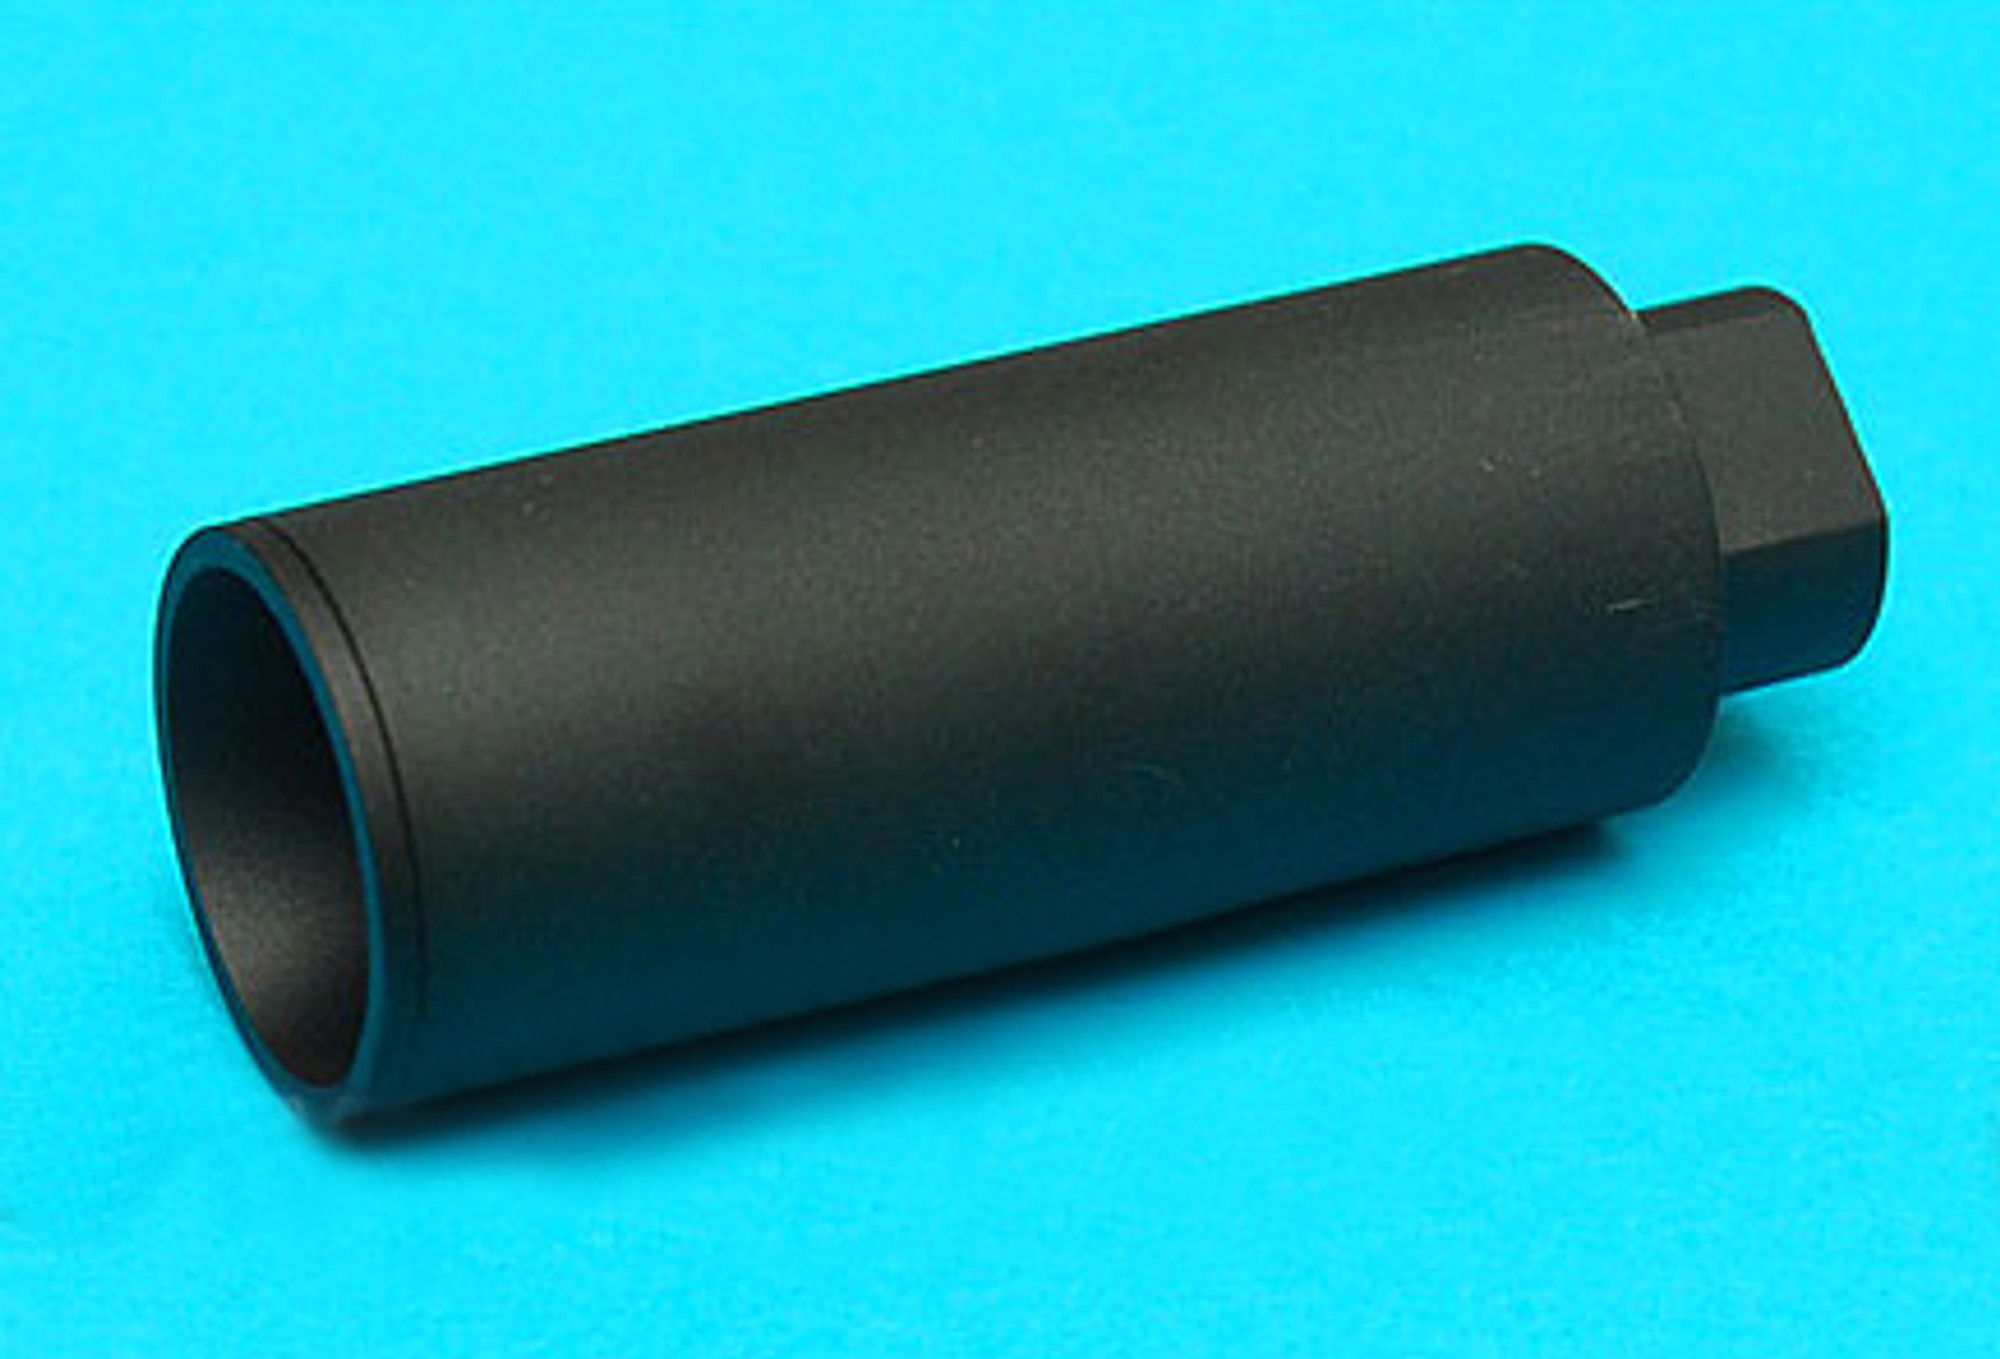 G&P Loud Hailer CAR-15 Type Flashhider for Airsoft AEG (14mm positive)